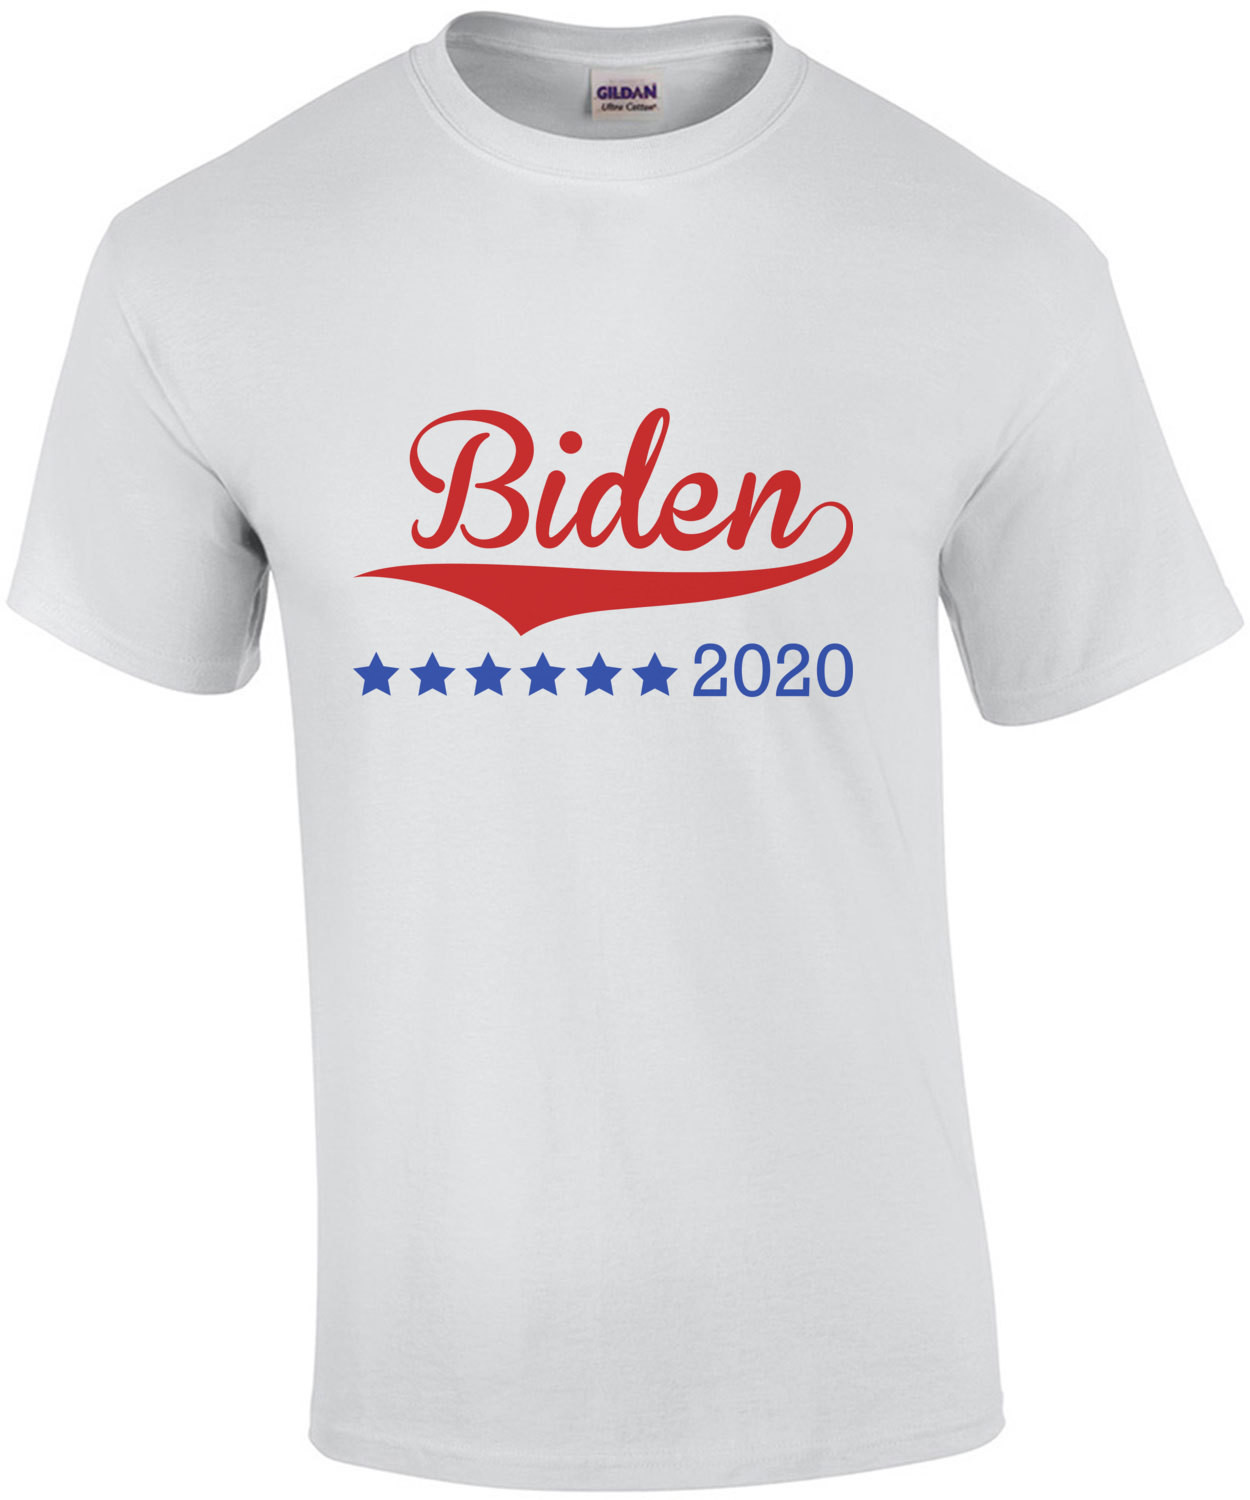 Biden 2020 - Joe Biden 2020 Election T-Shirt